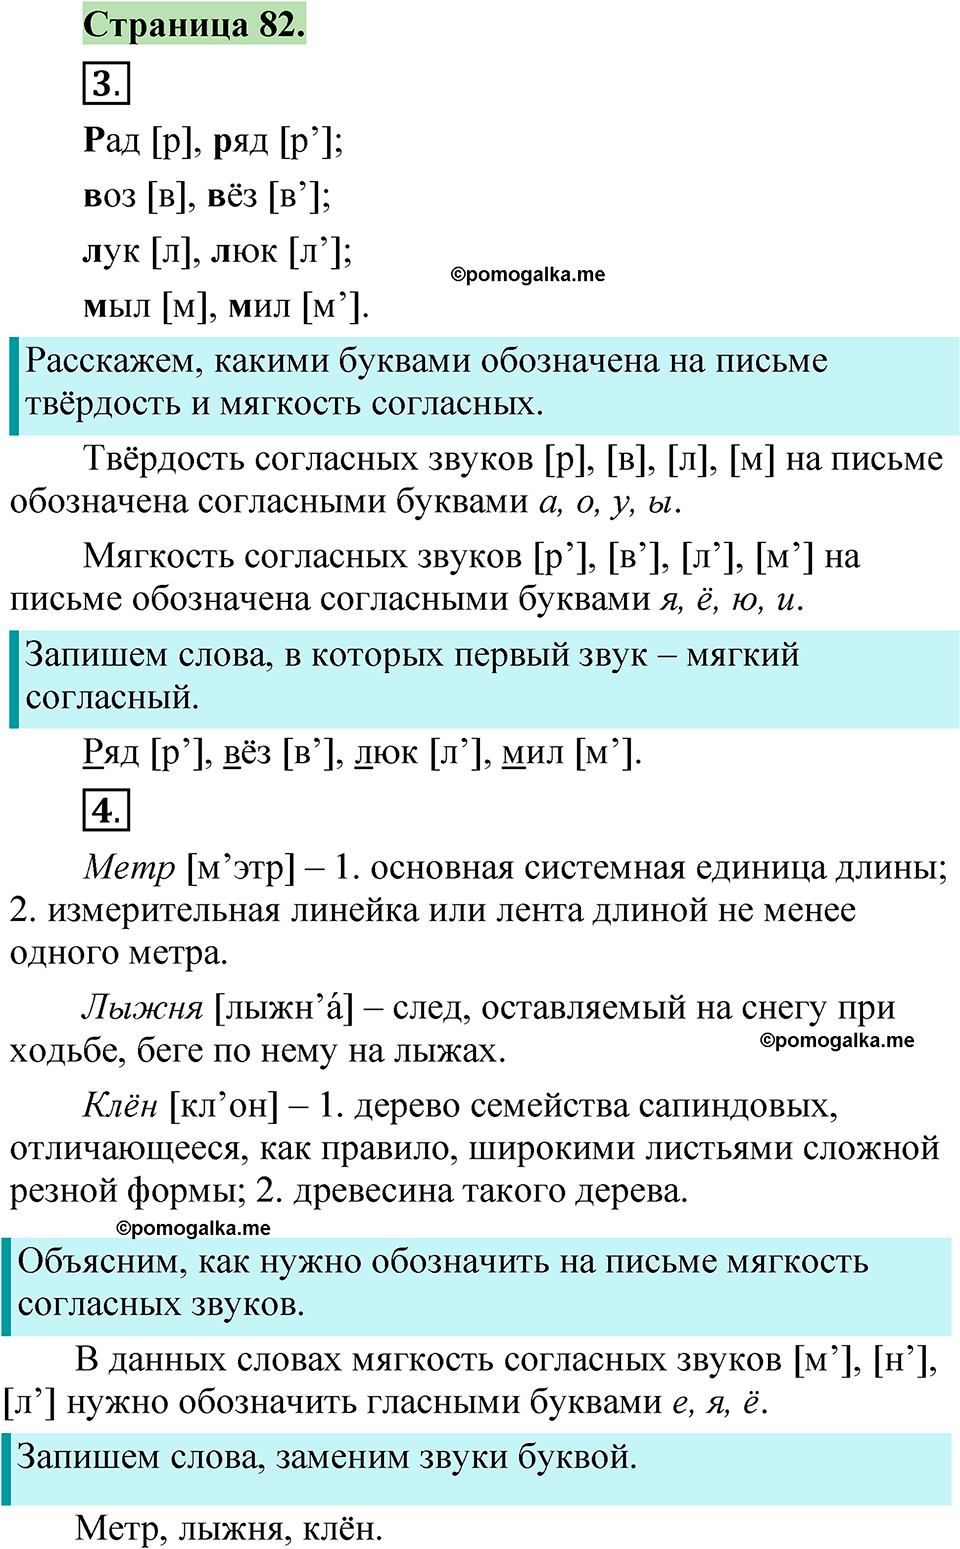 страница 82 русский язык 1 класс Канакина 2023